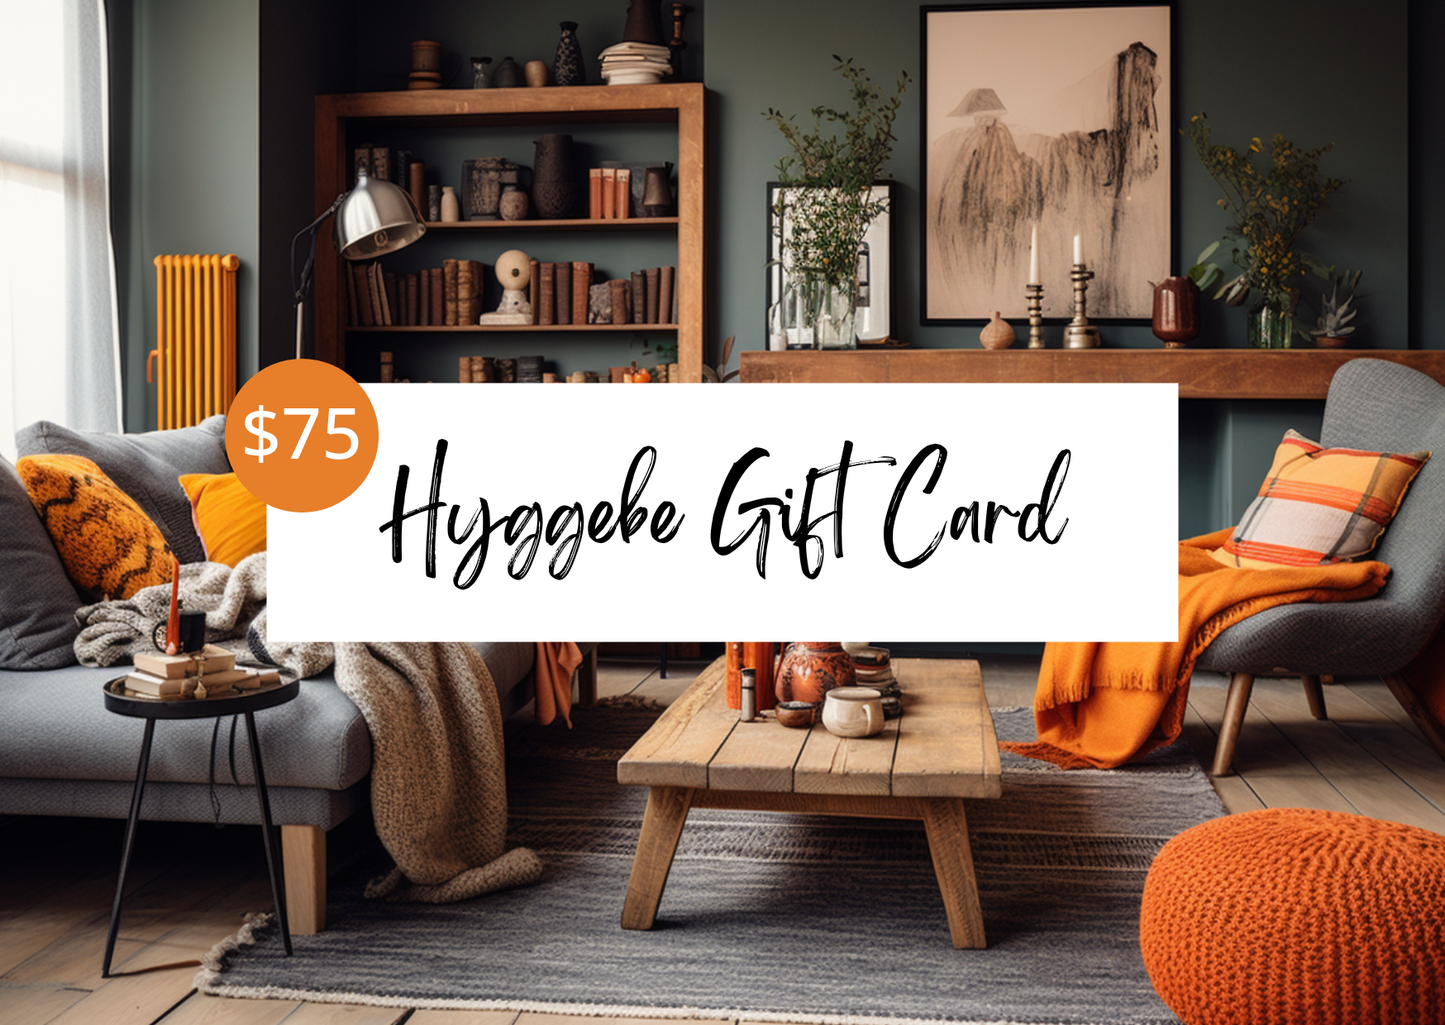 Hyggebe gift card